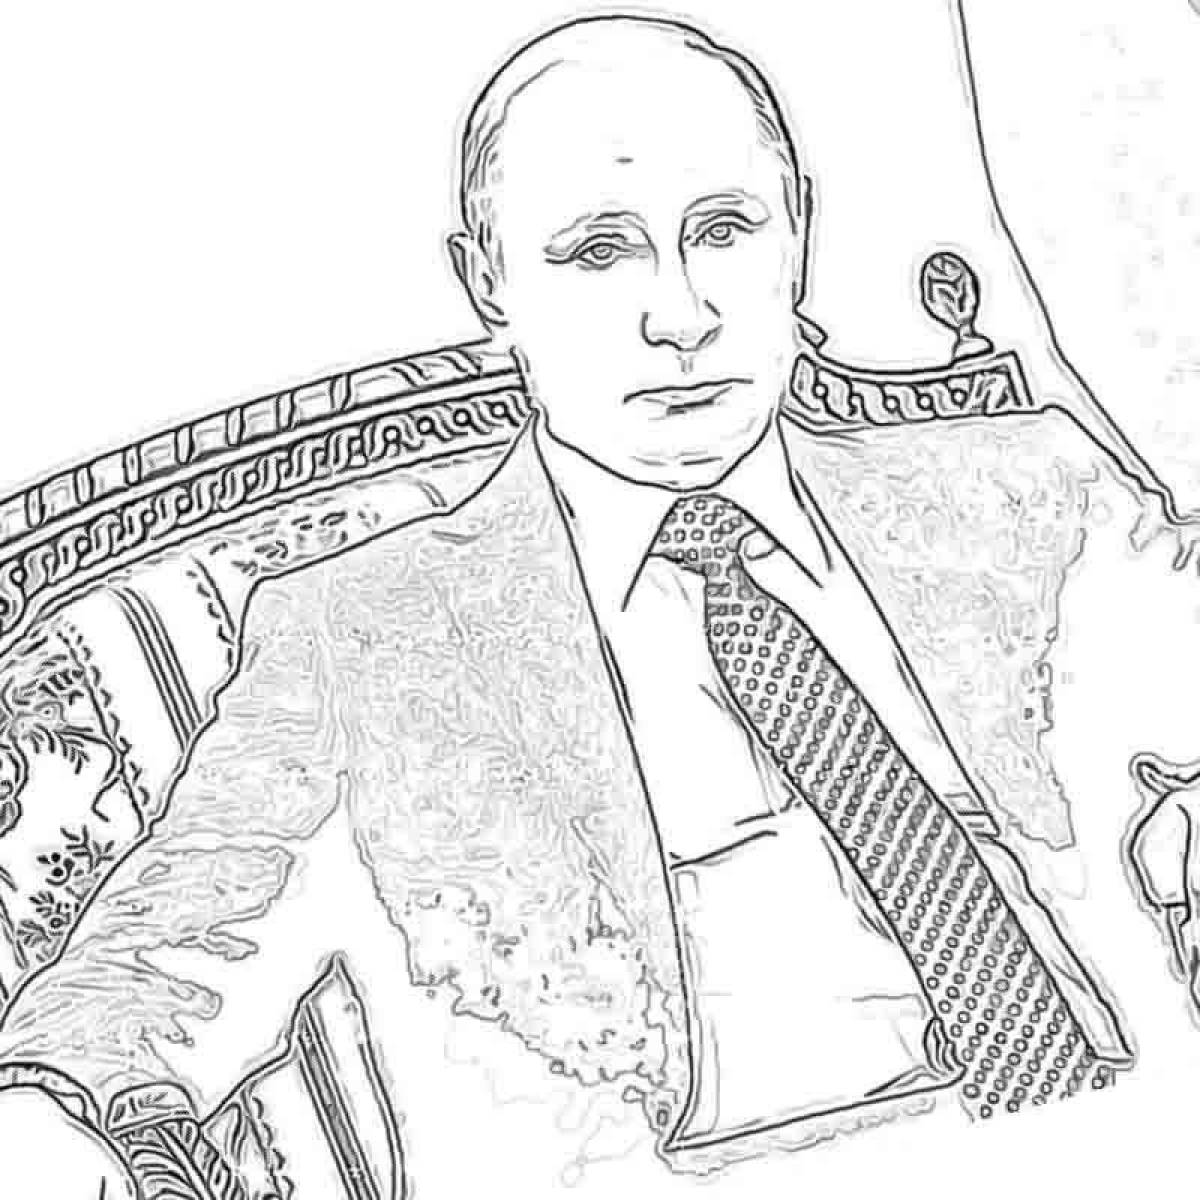 Putin #9